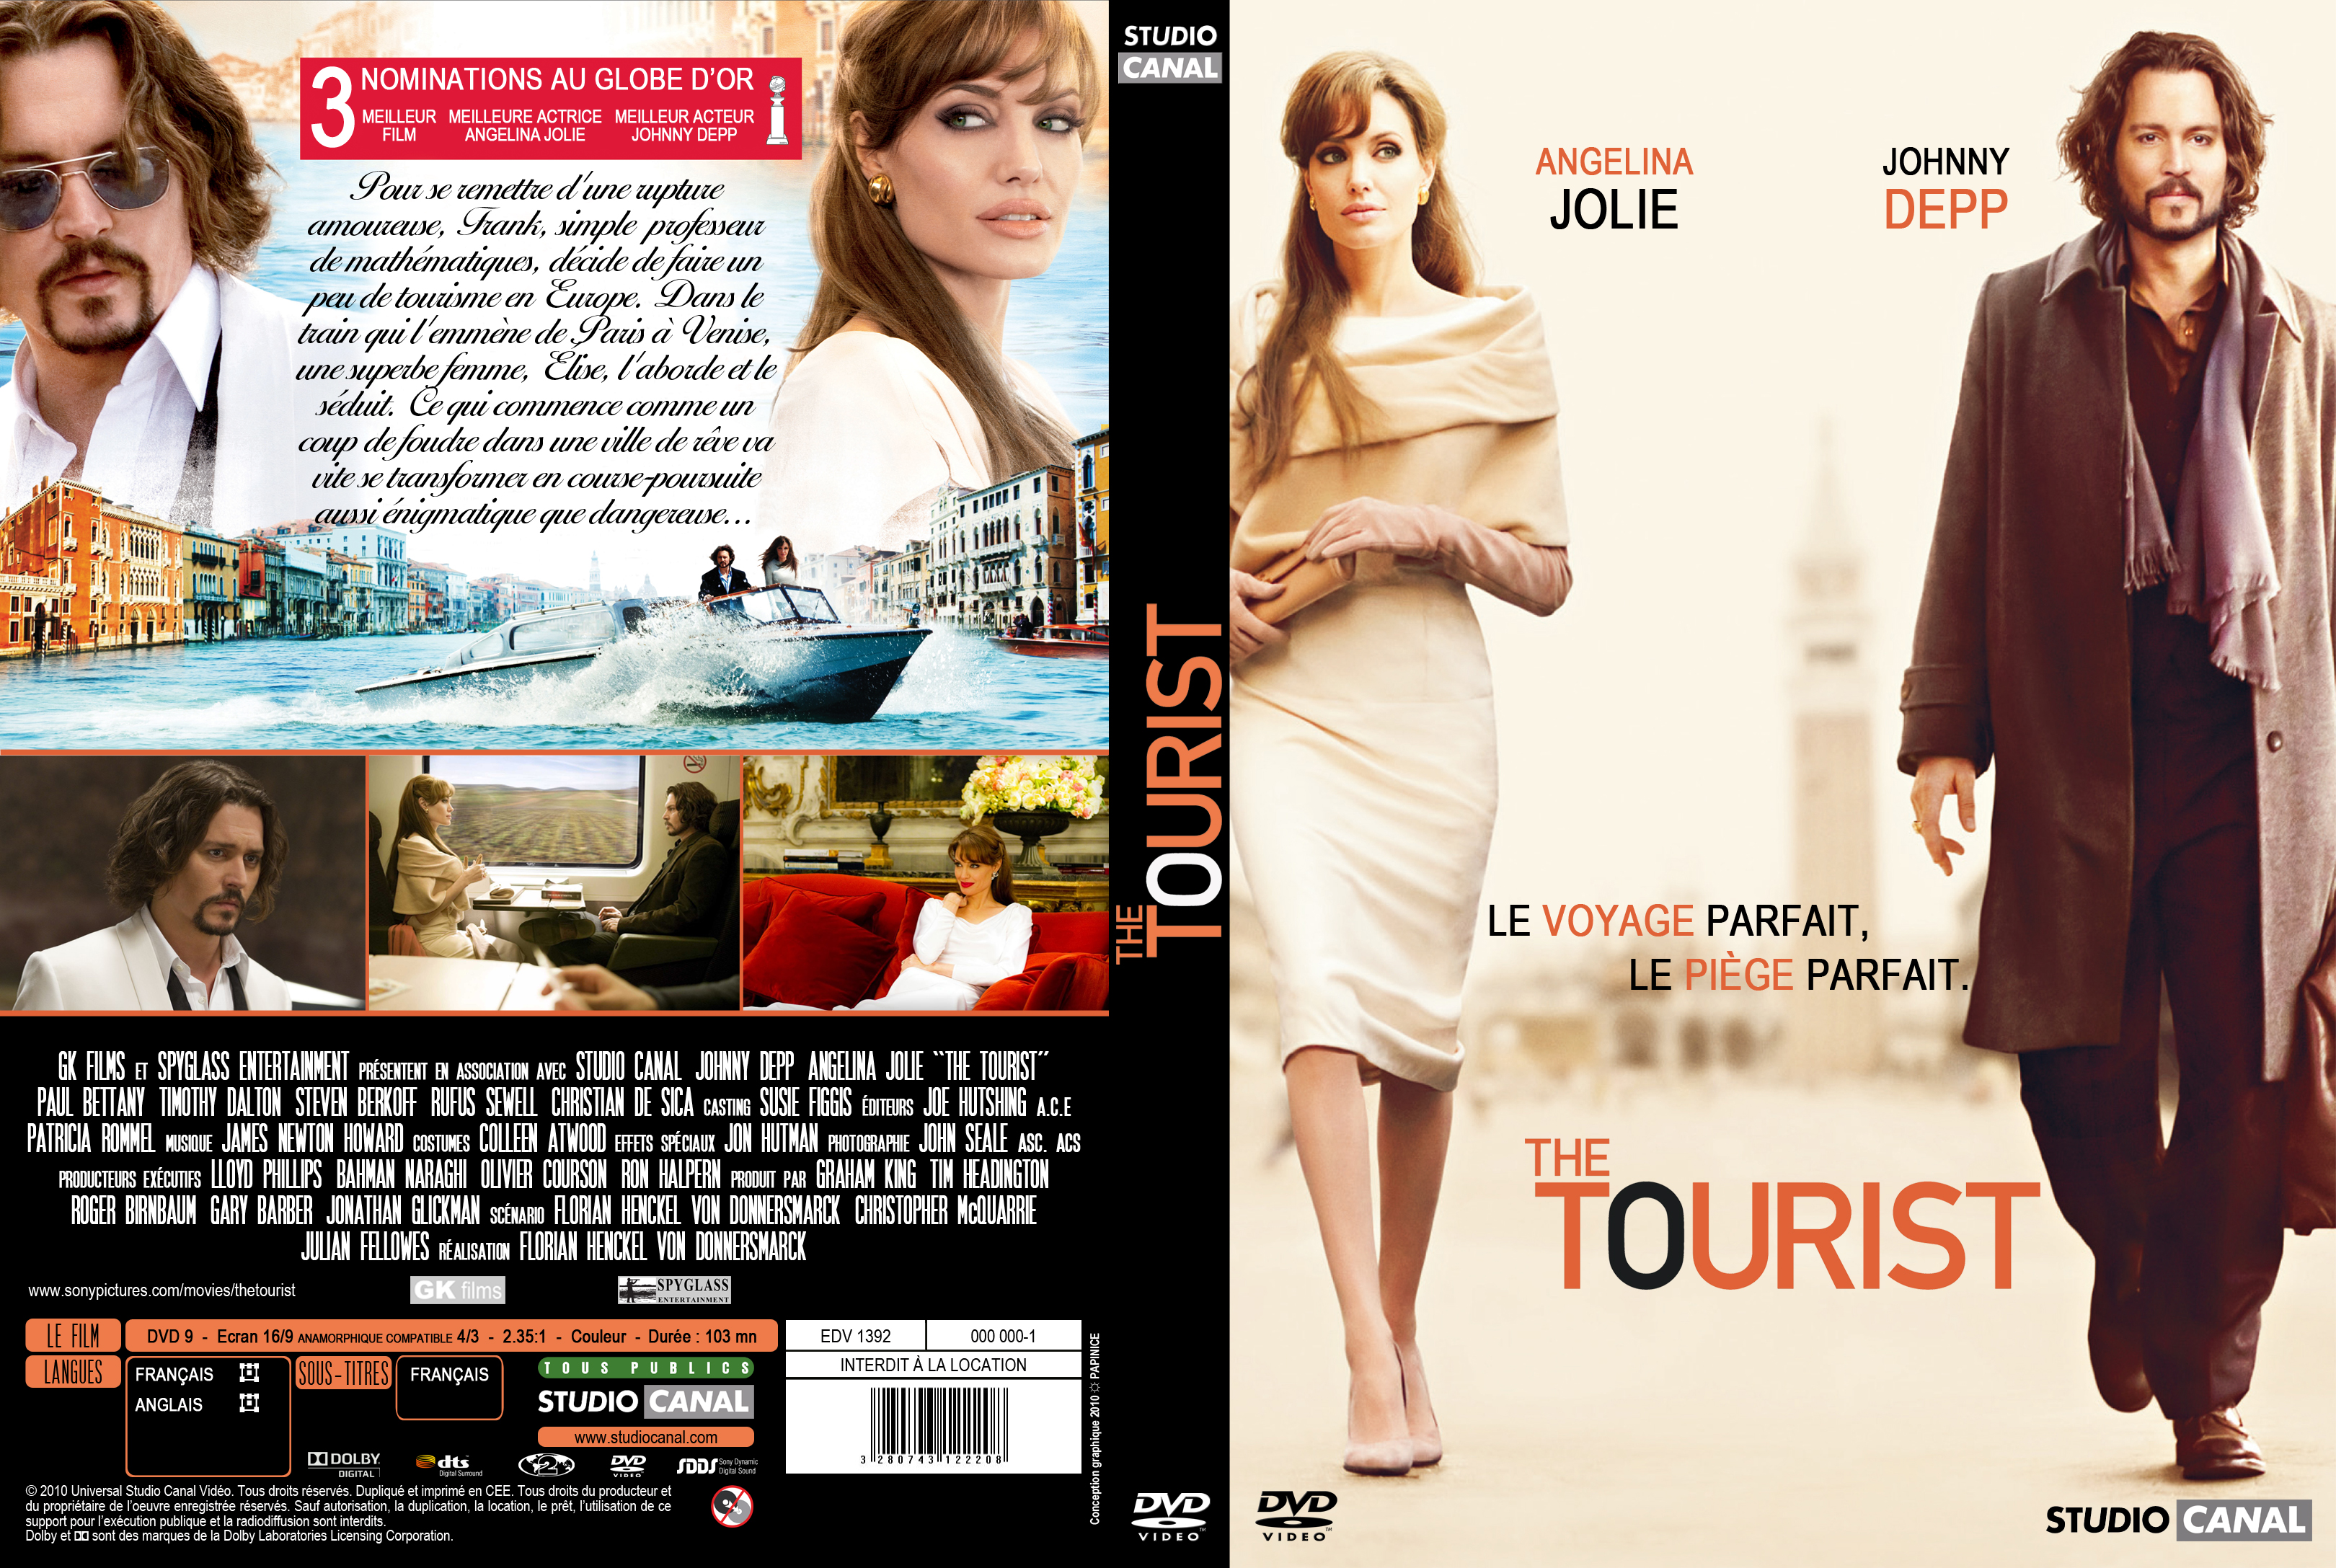 Jaquette DVD The tourist custom